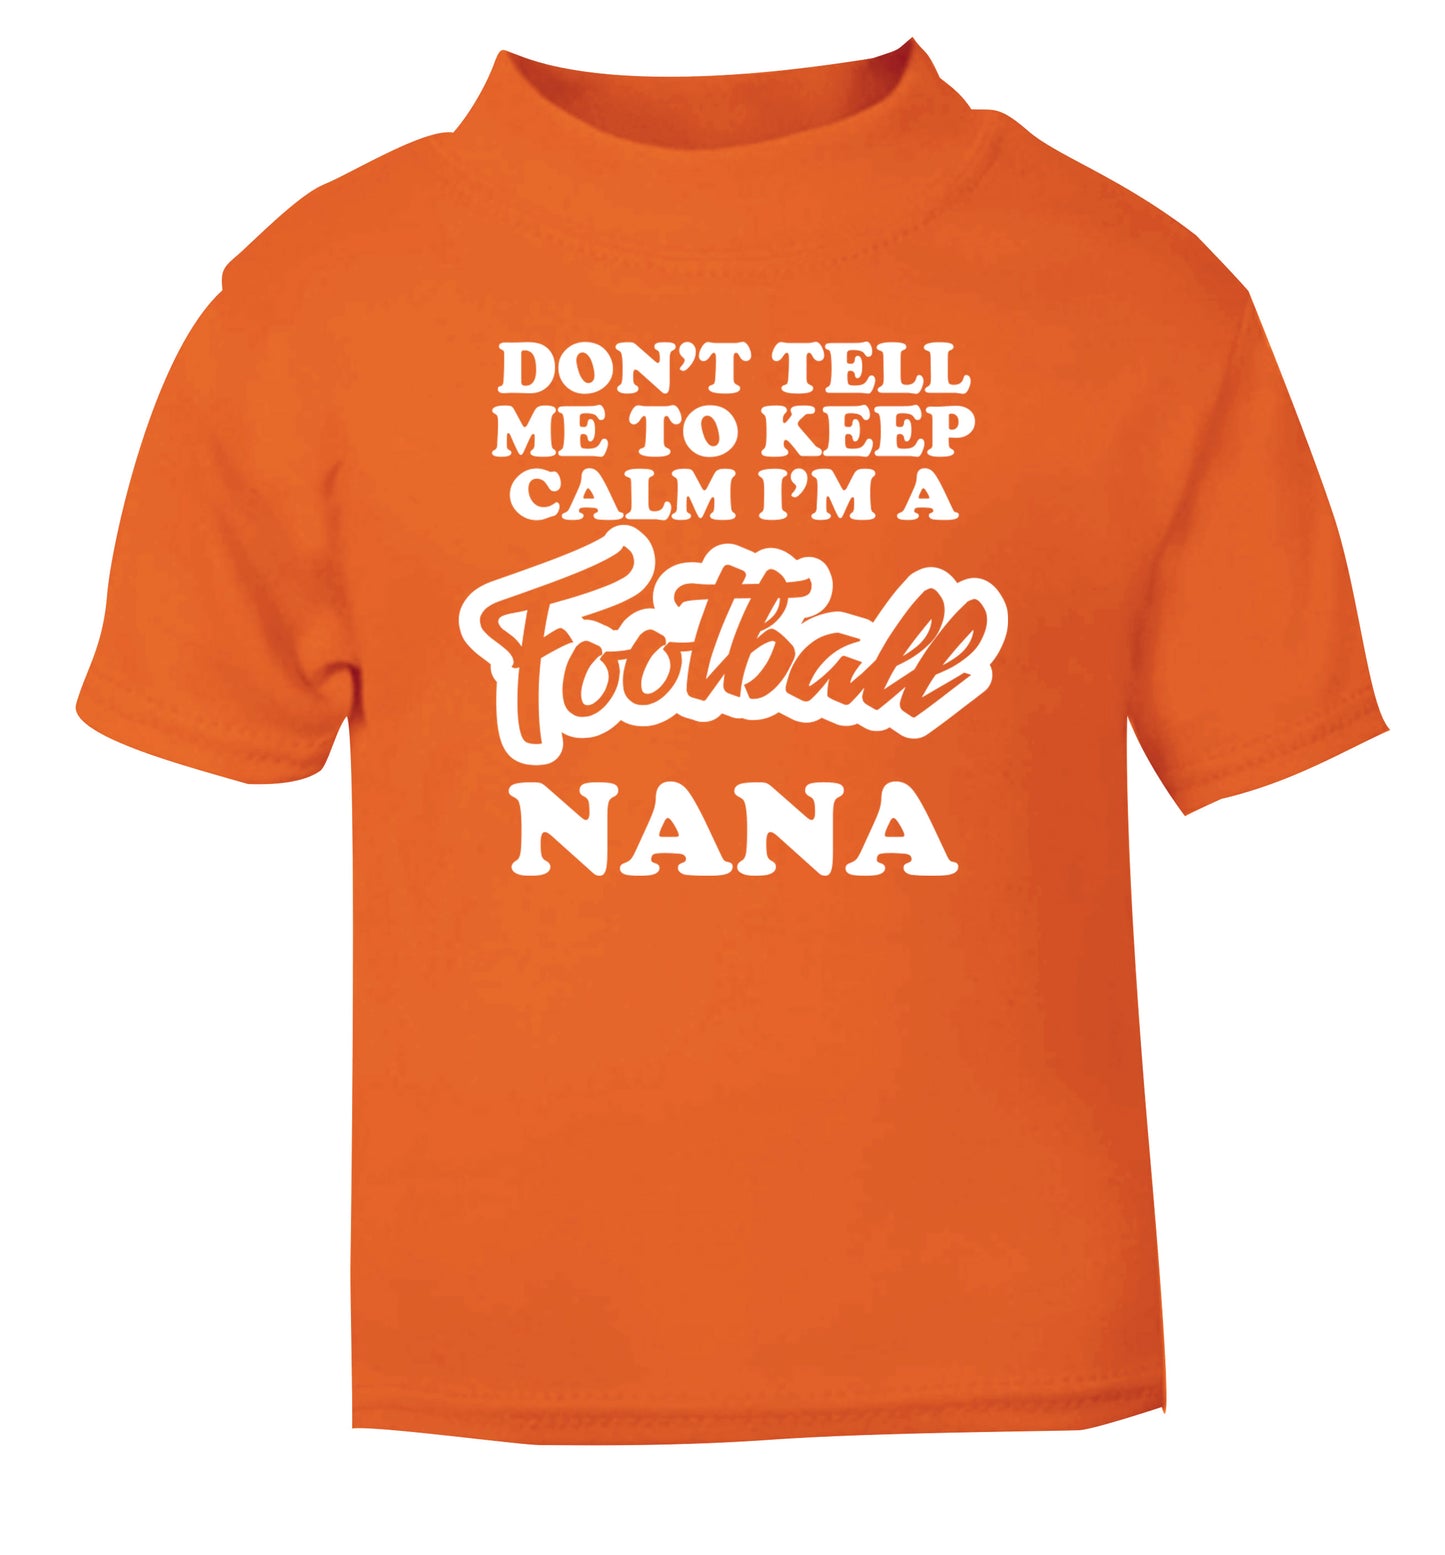 Don't tell me to keep calm I'm a football nana orange Baby Toddler Tshirt 2 Years